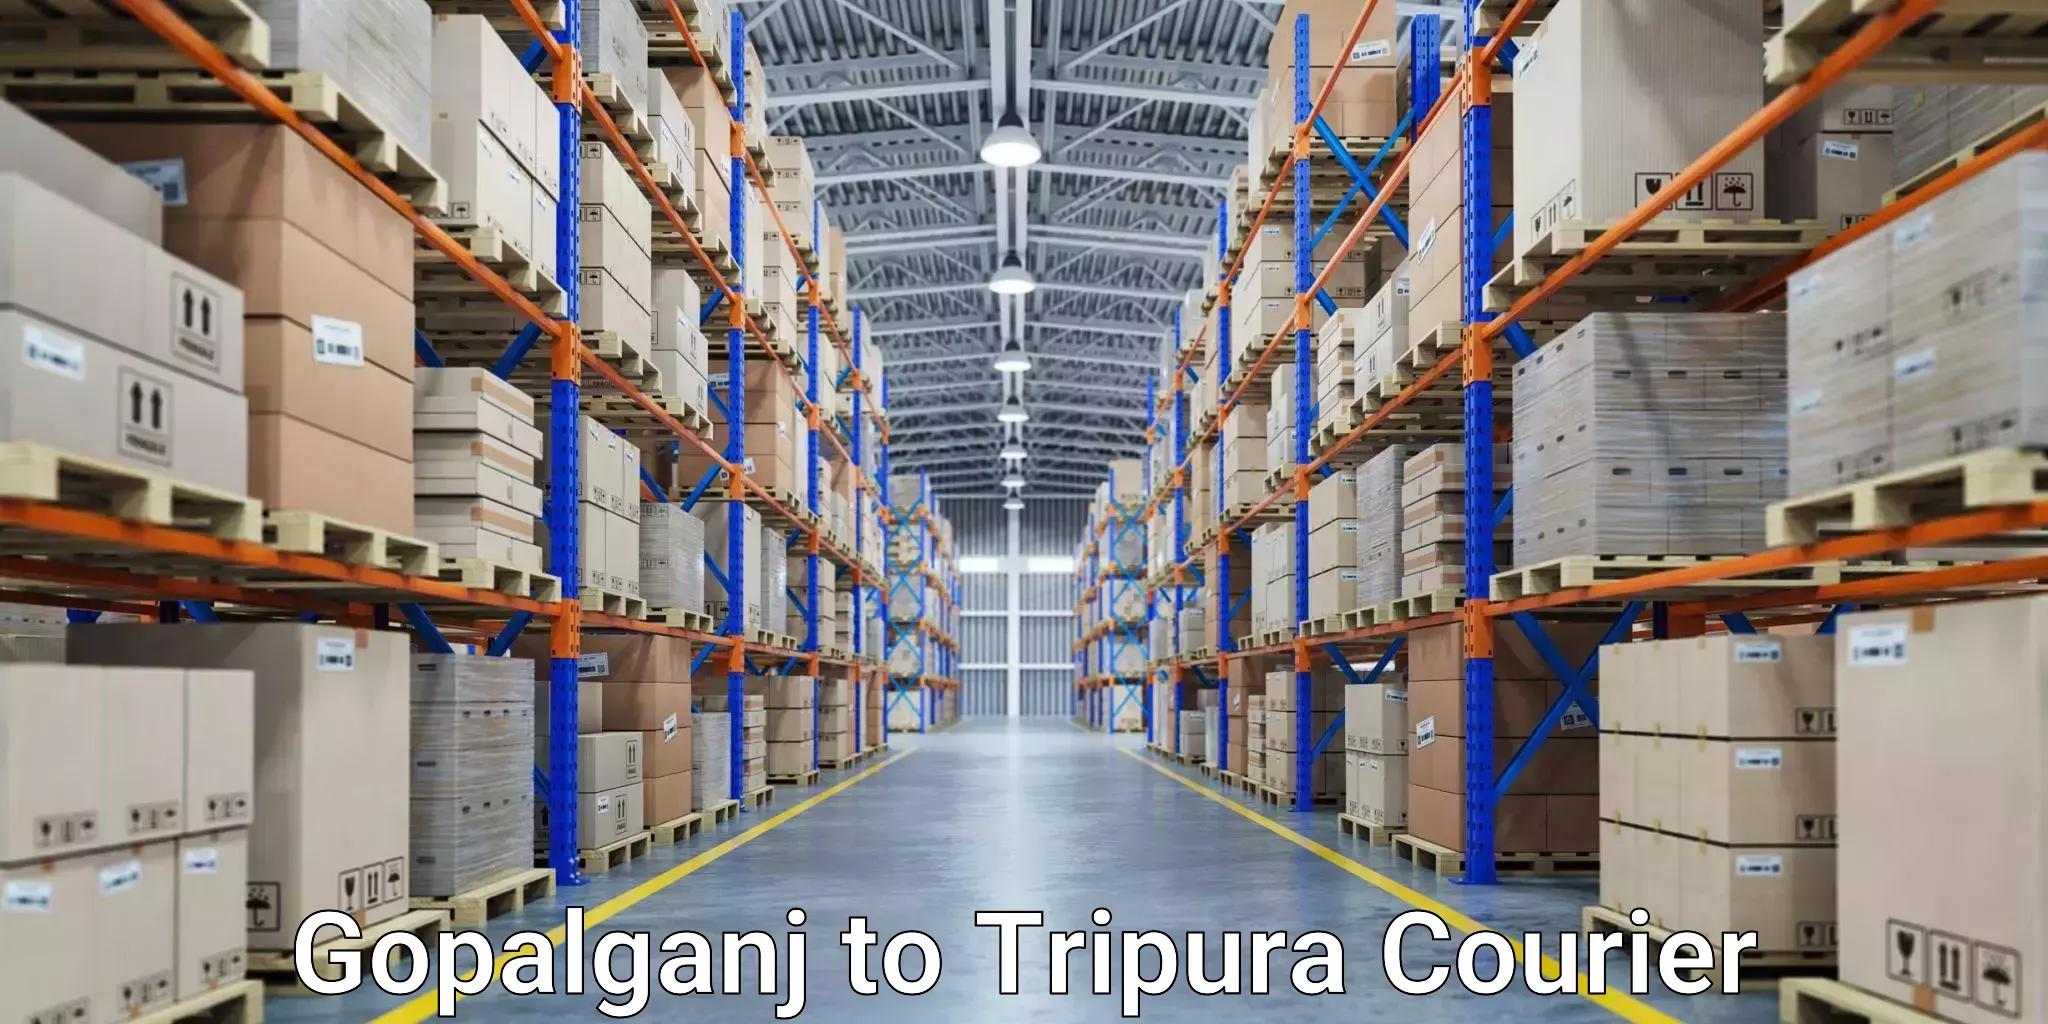 Business delivery service Gopalganj to Agartala